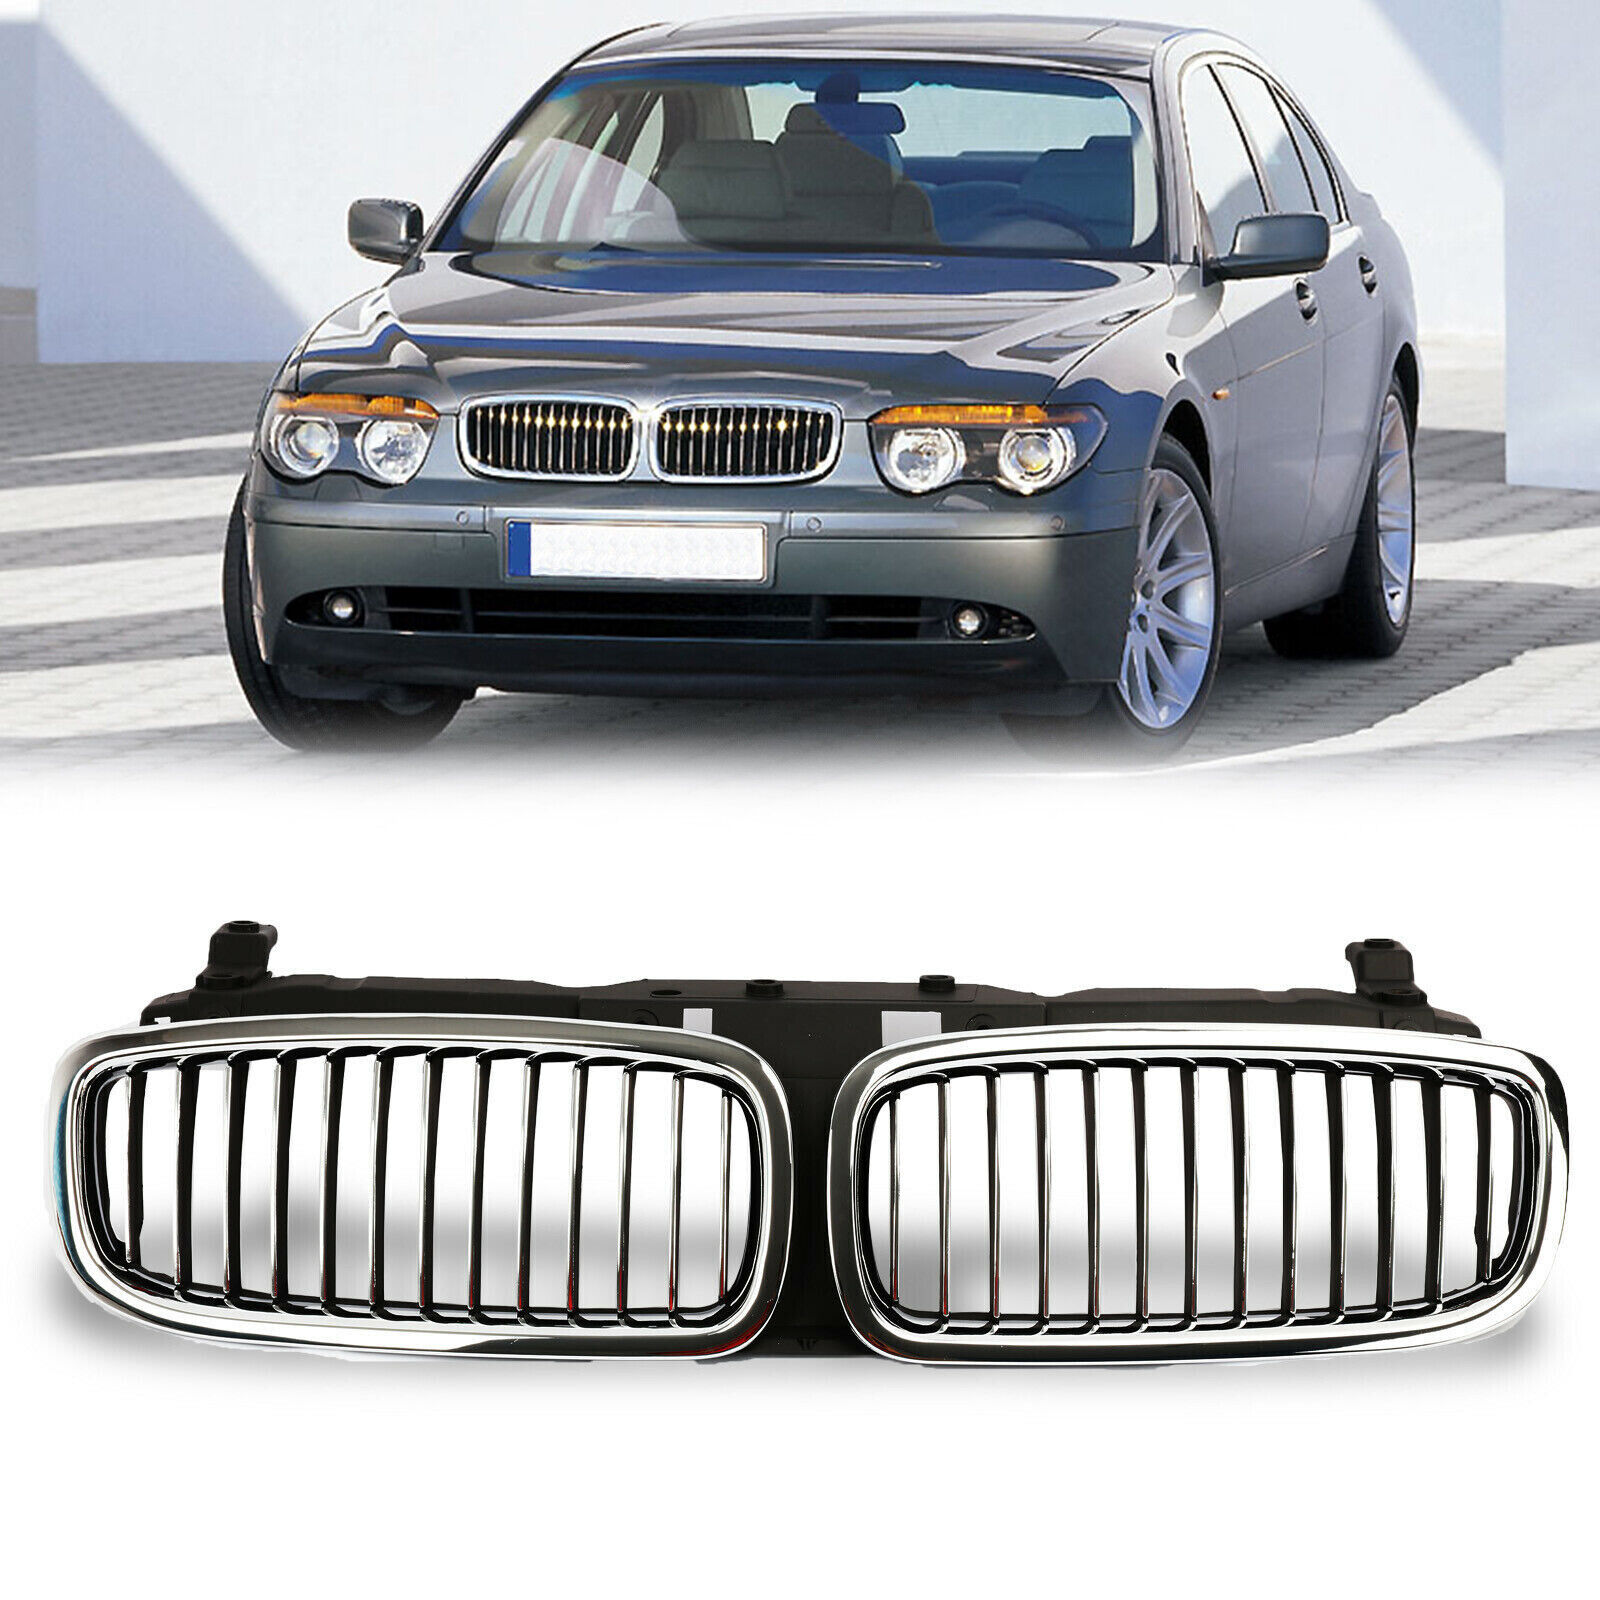 Front Kidney Grille Fit For BMW E65 7 Series 2002-2005 745i 745Li Chrome Black